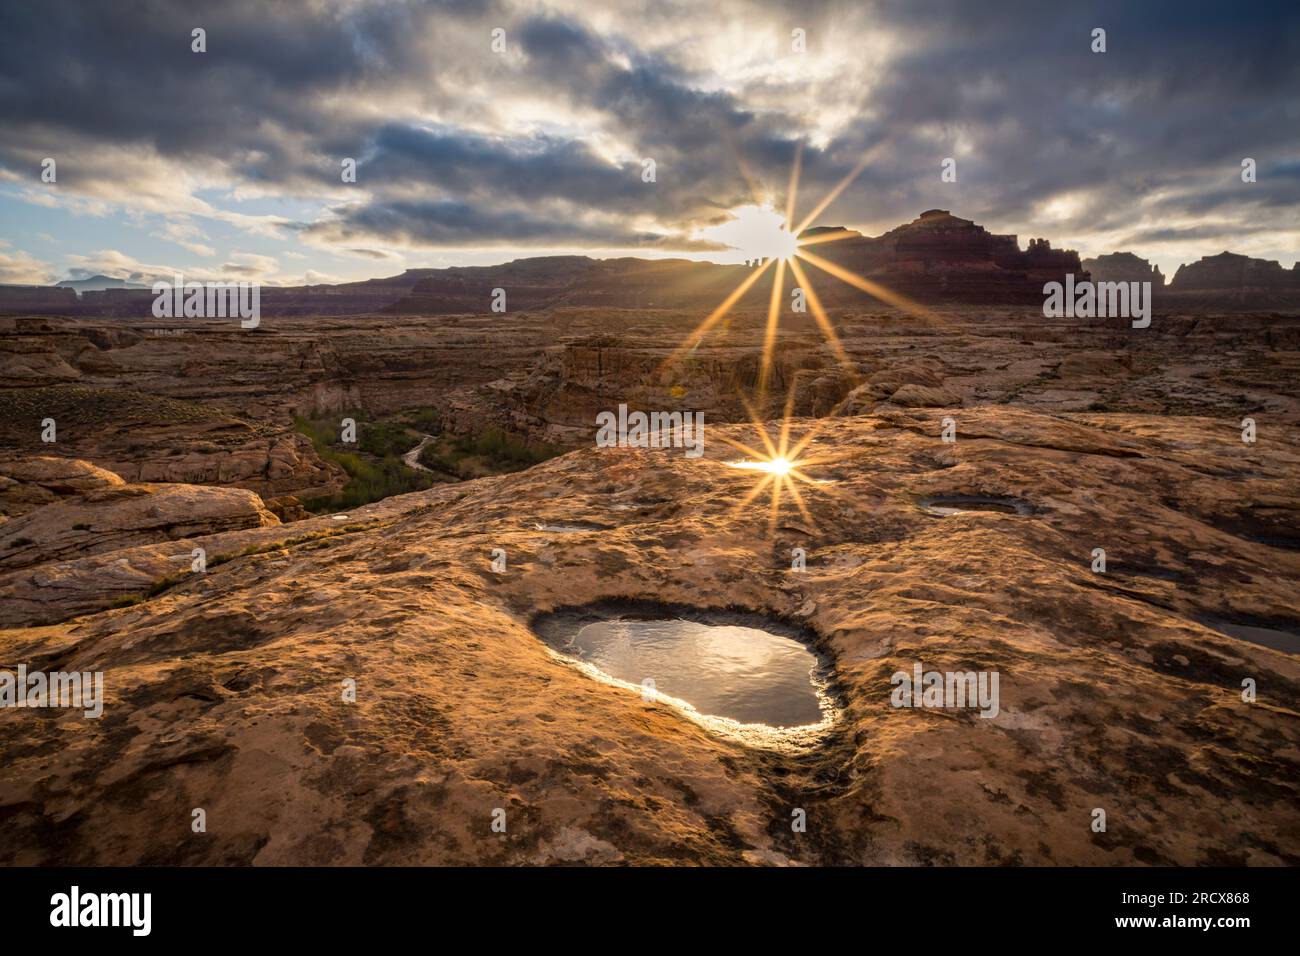 Sun rising in a desert landscape. Stock Photo